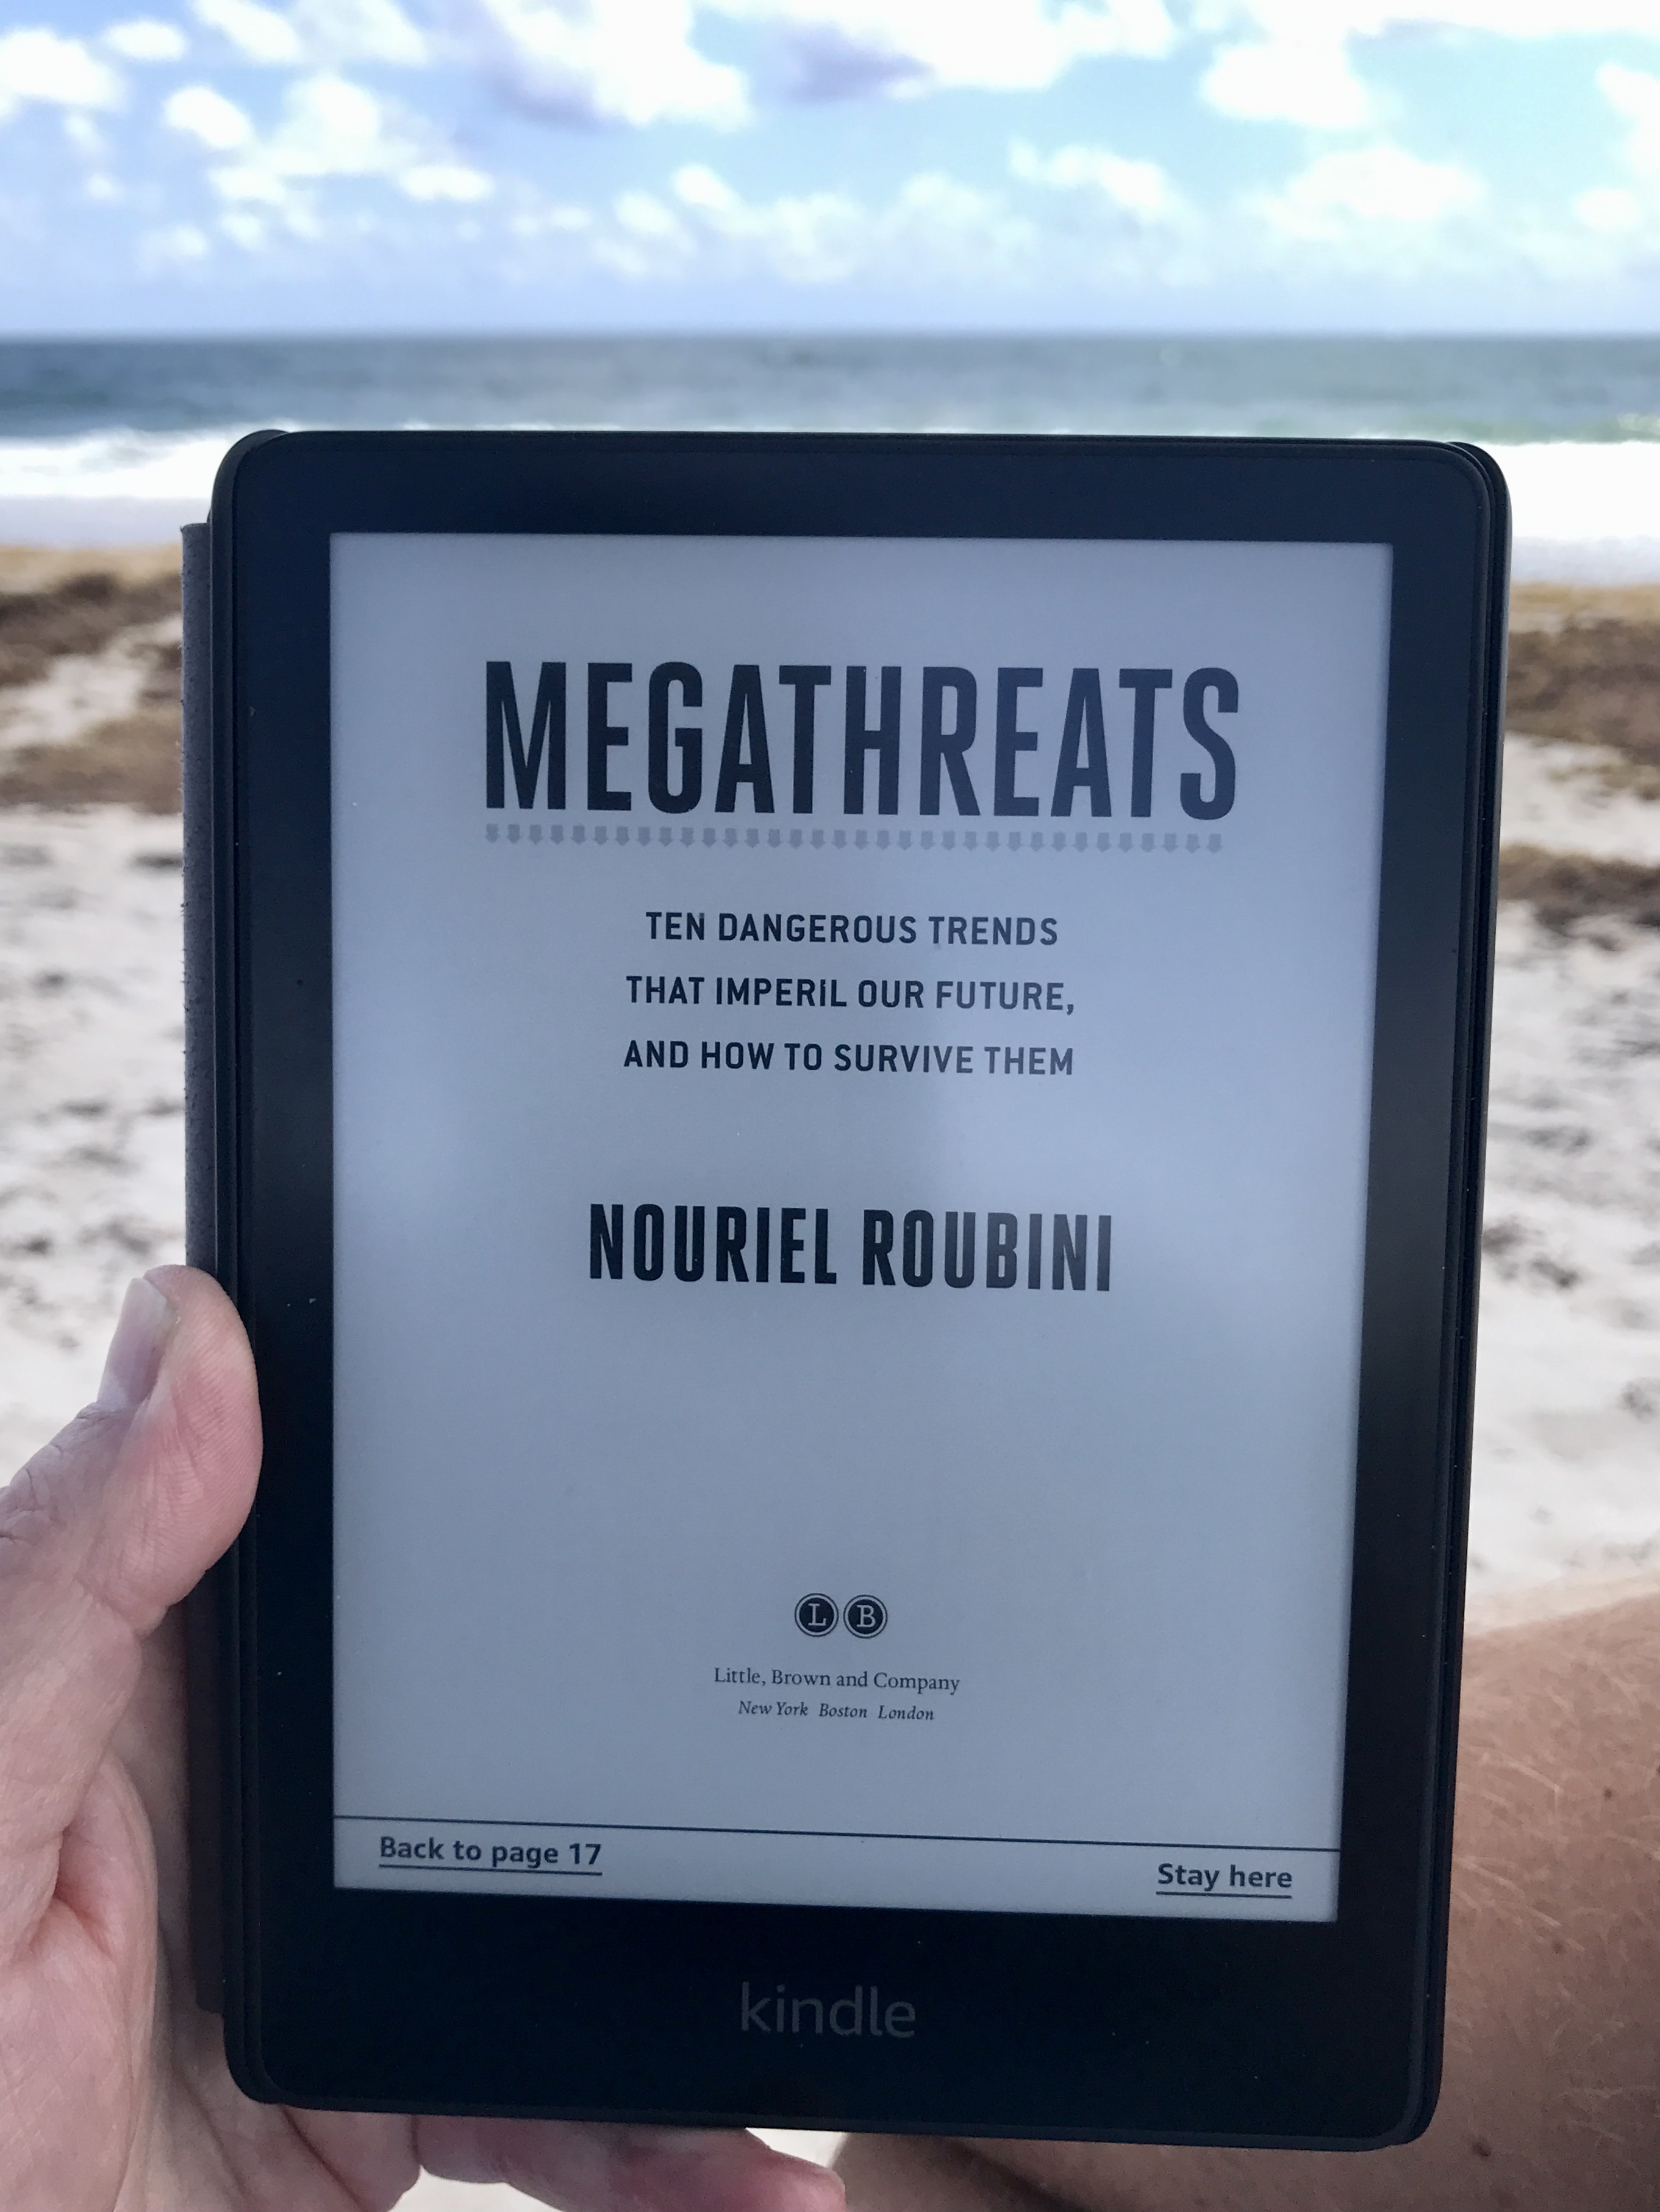 Kindle ebook ereader on beach